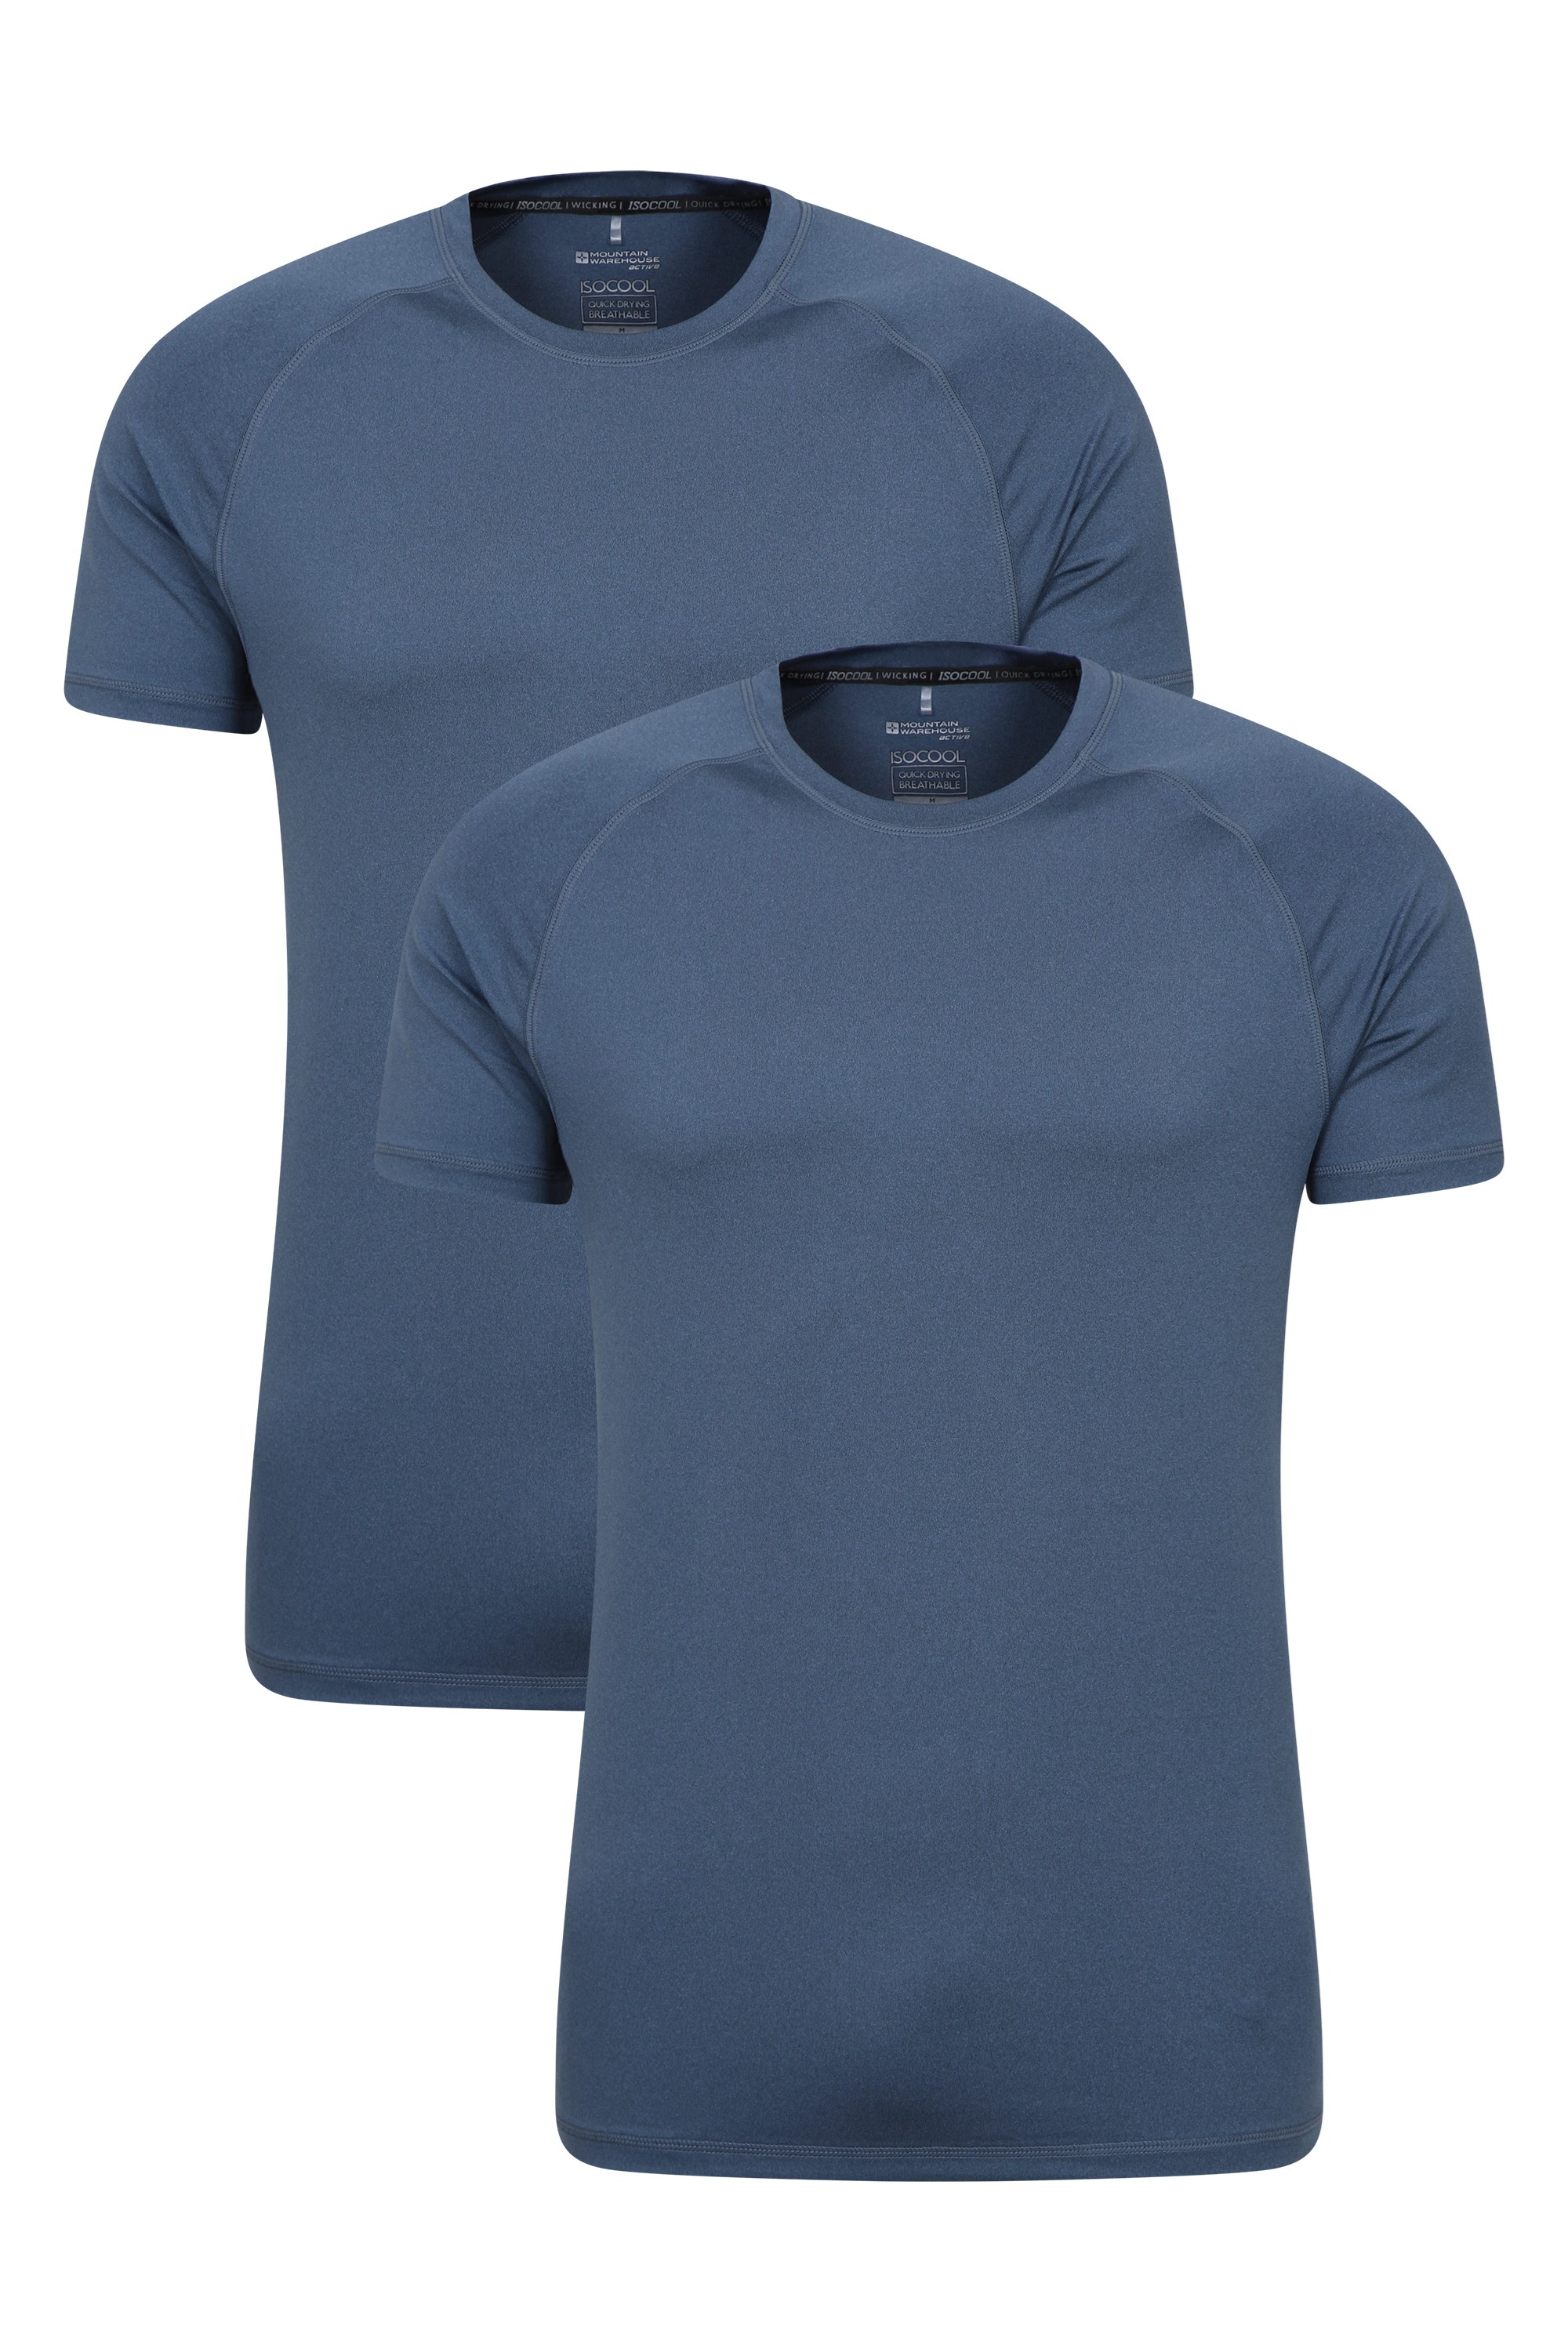 Agra Mens Isocool T-Shirt 2-Pack - Blue